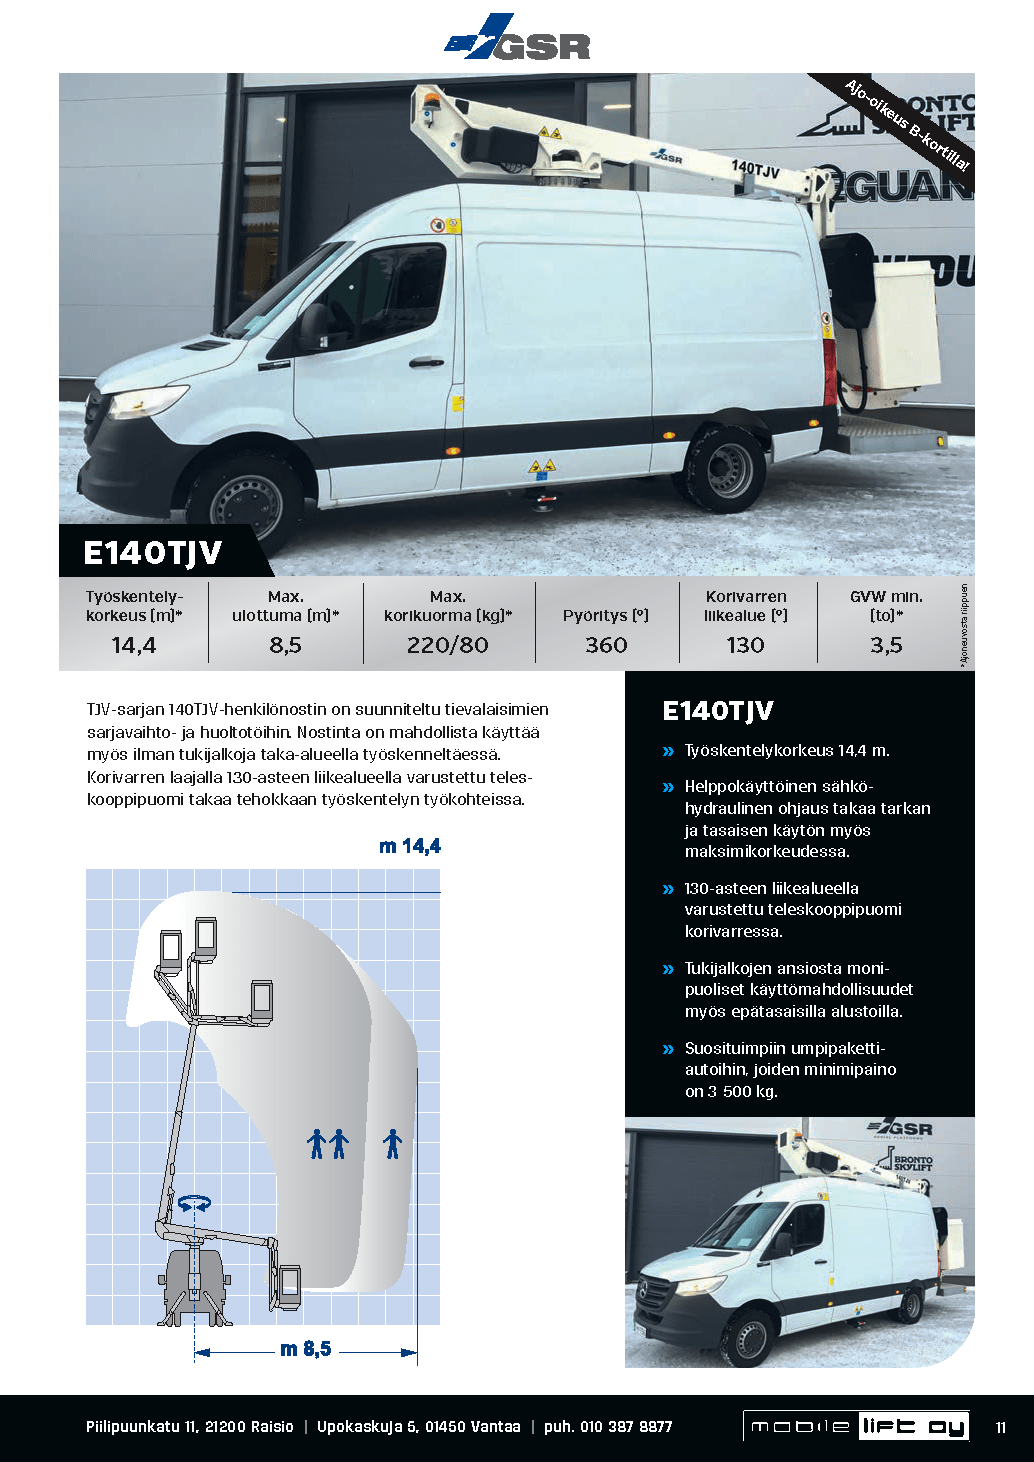 Mobile Lift Oy - E140TJV